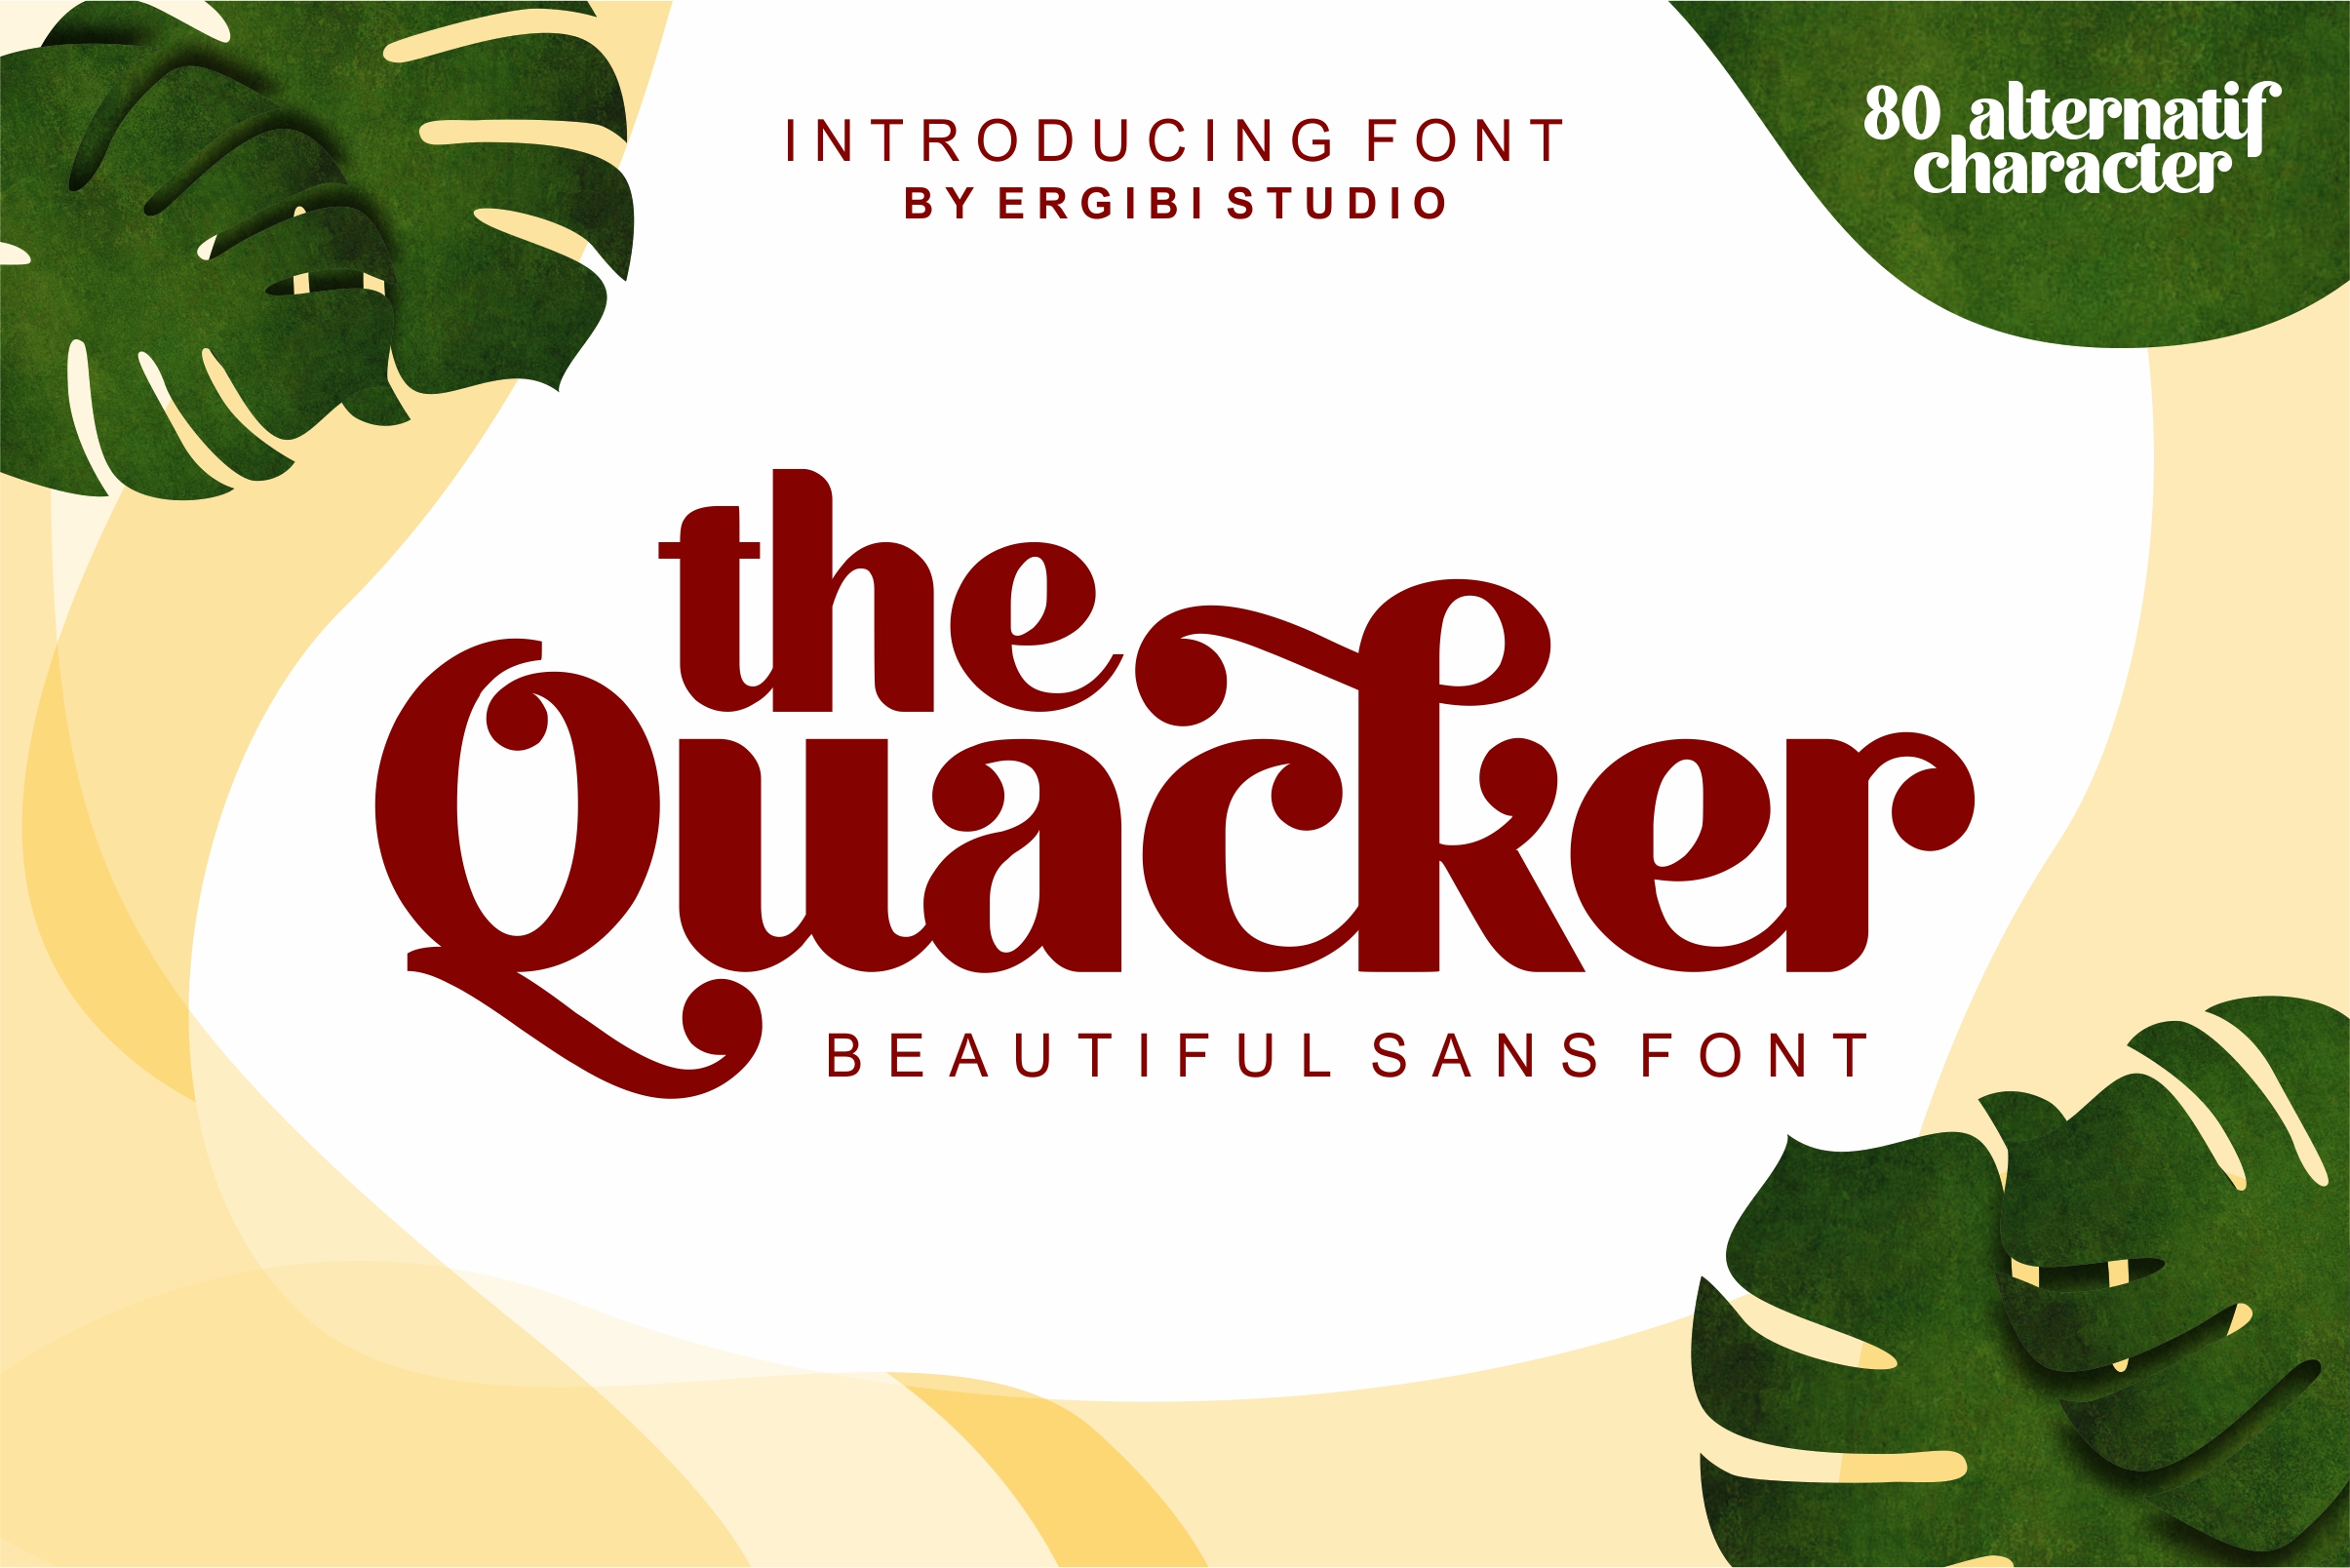 Quacker Free Font